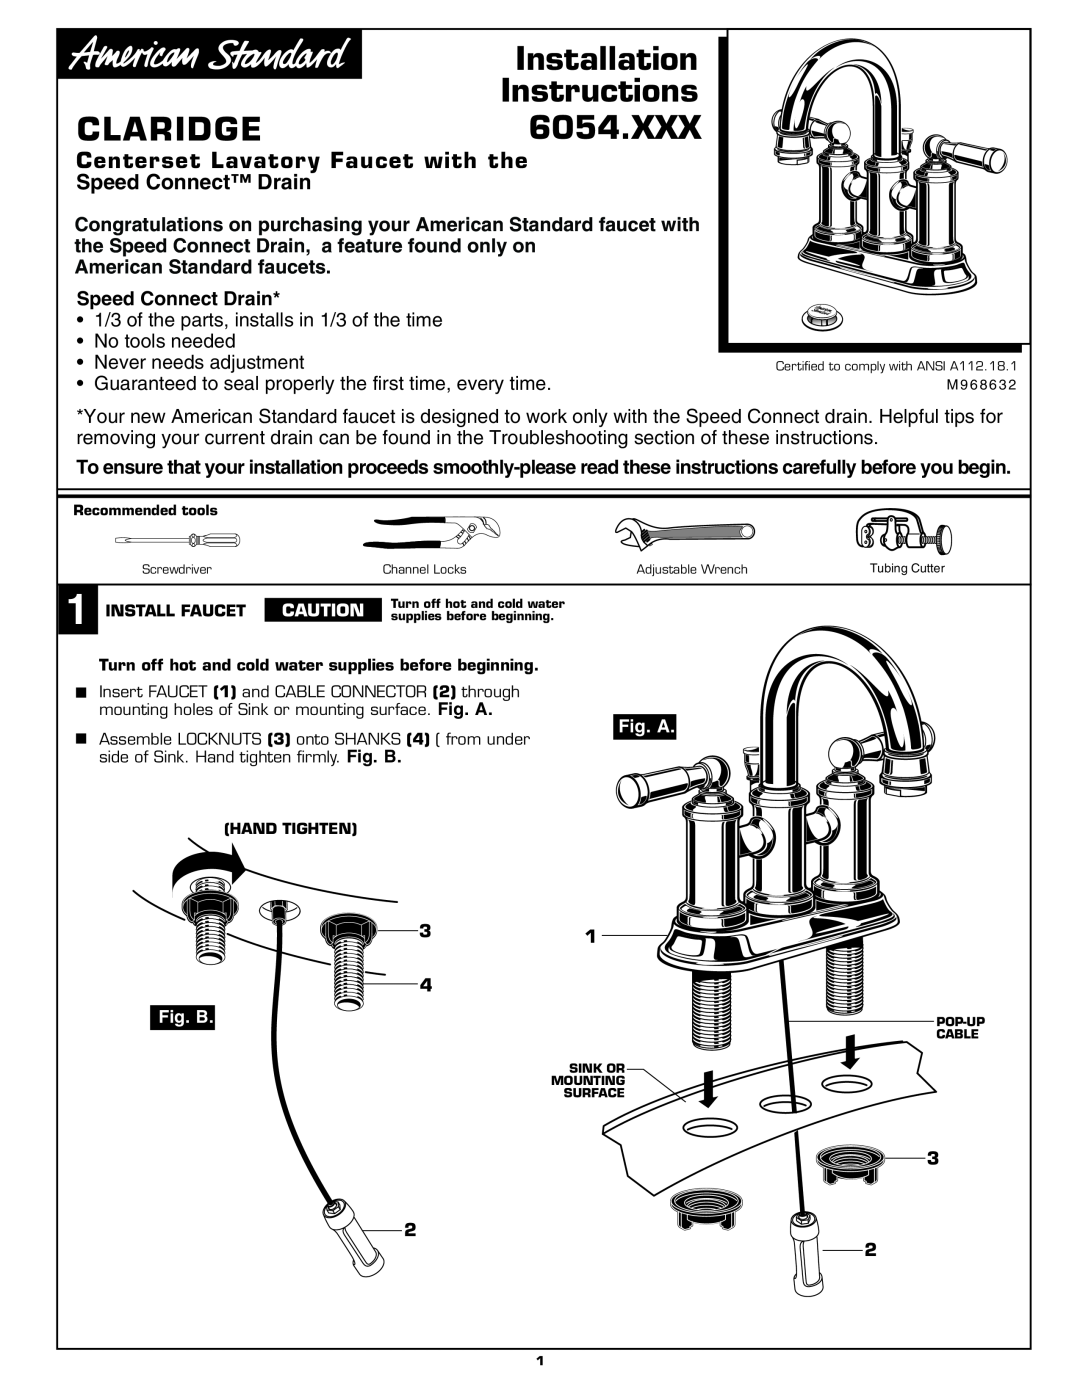 American Standard 6054.XXX installation instructions Installation, Instructions, Claridge, Fig. A, Fig. B, Install Faucet 